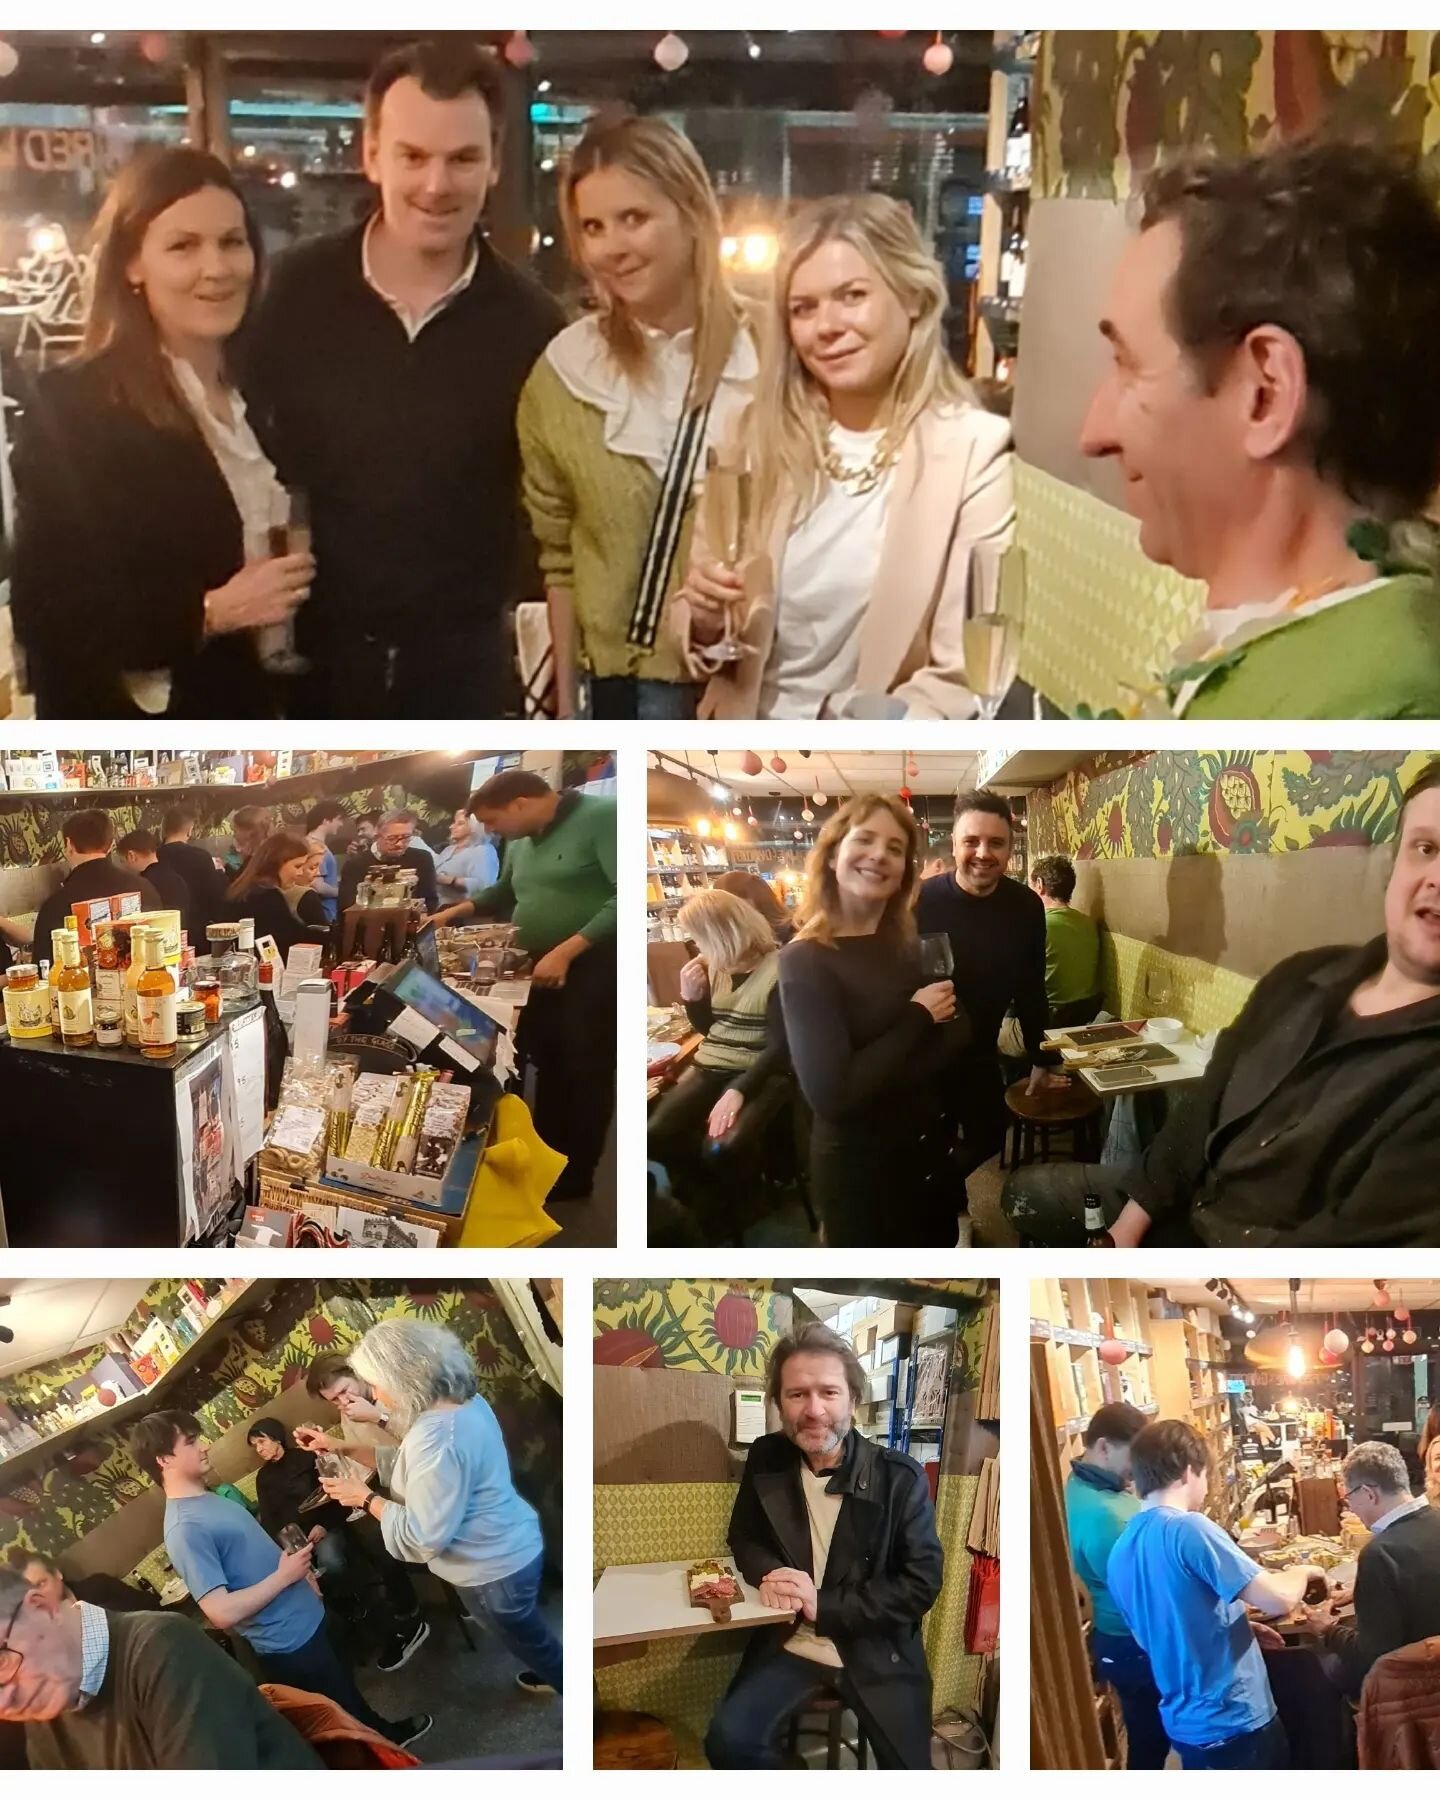 Some highlights from our St Patricks day celebration ....
.
#tasting #stpatricksday #tastingroom #twickenham #teddington #indoorsitting #stmargaretswines #eelpieisland #stpatricksday☘️ #stmargarets #wine #fun #food #londontown #instagram #southwestlo